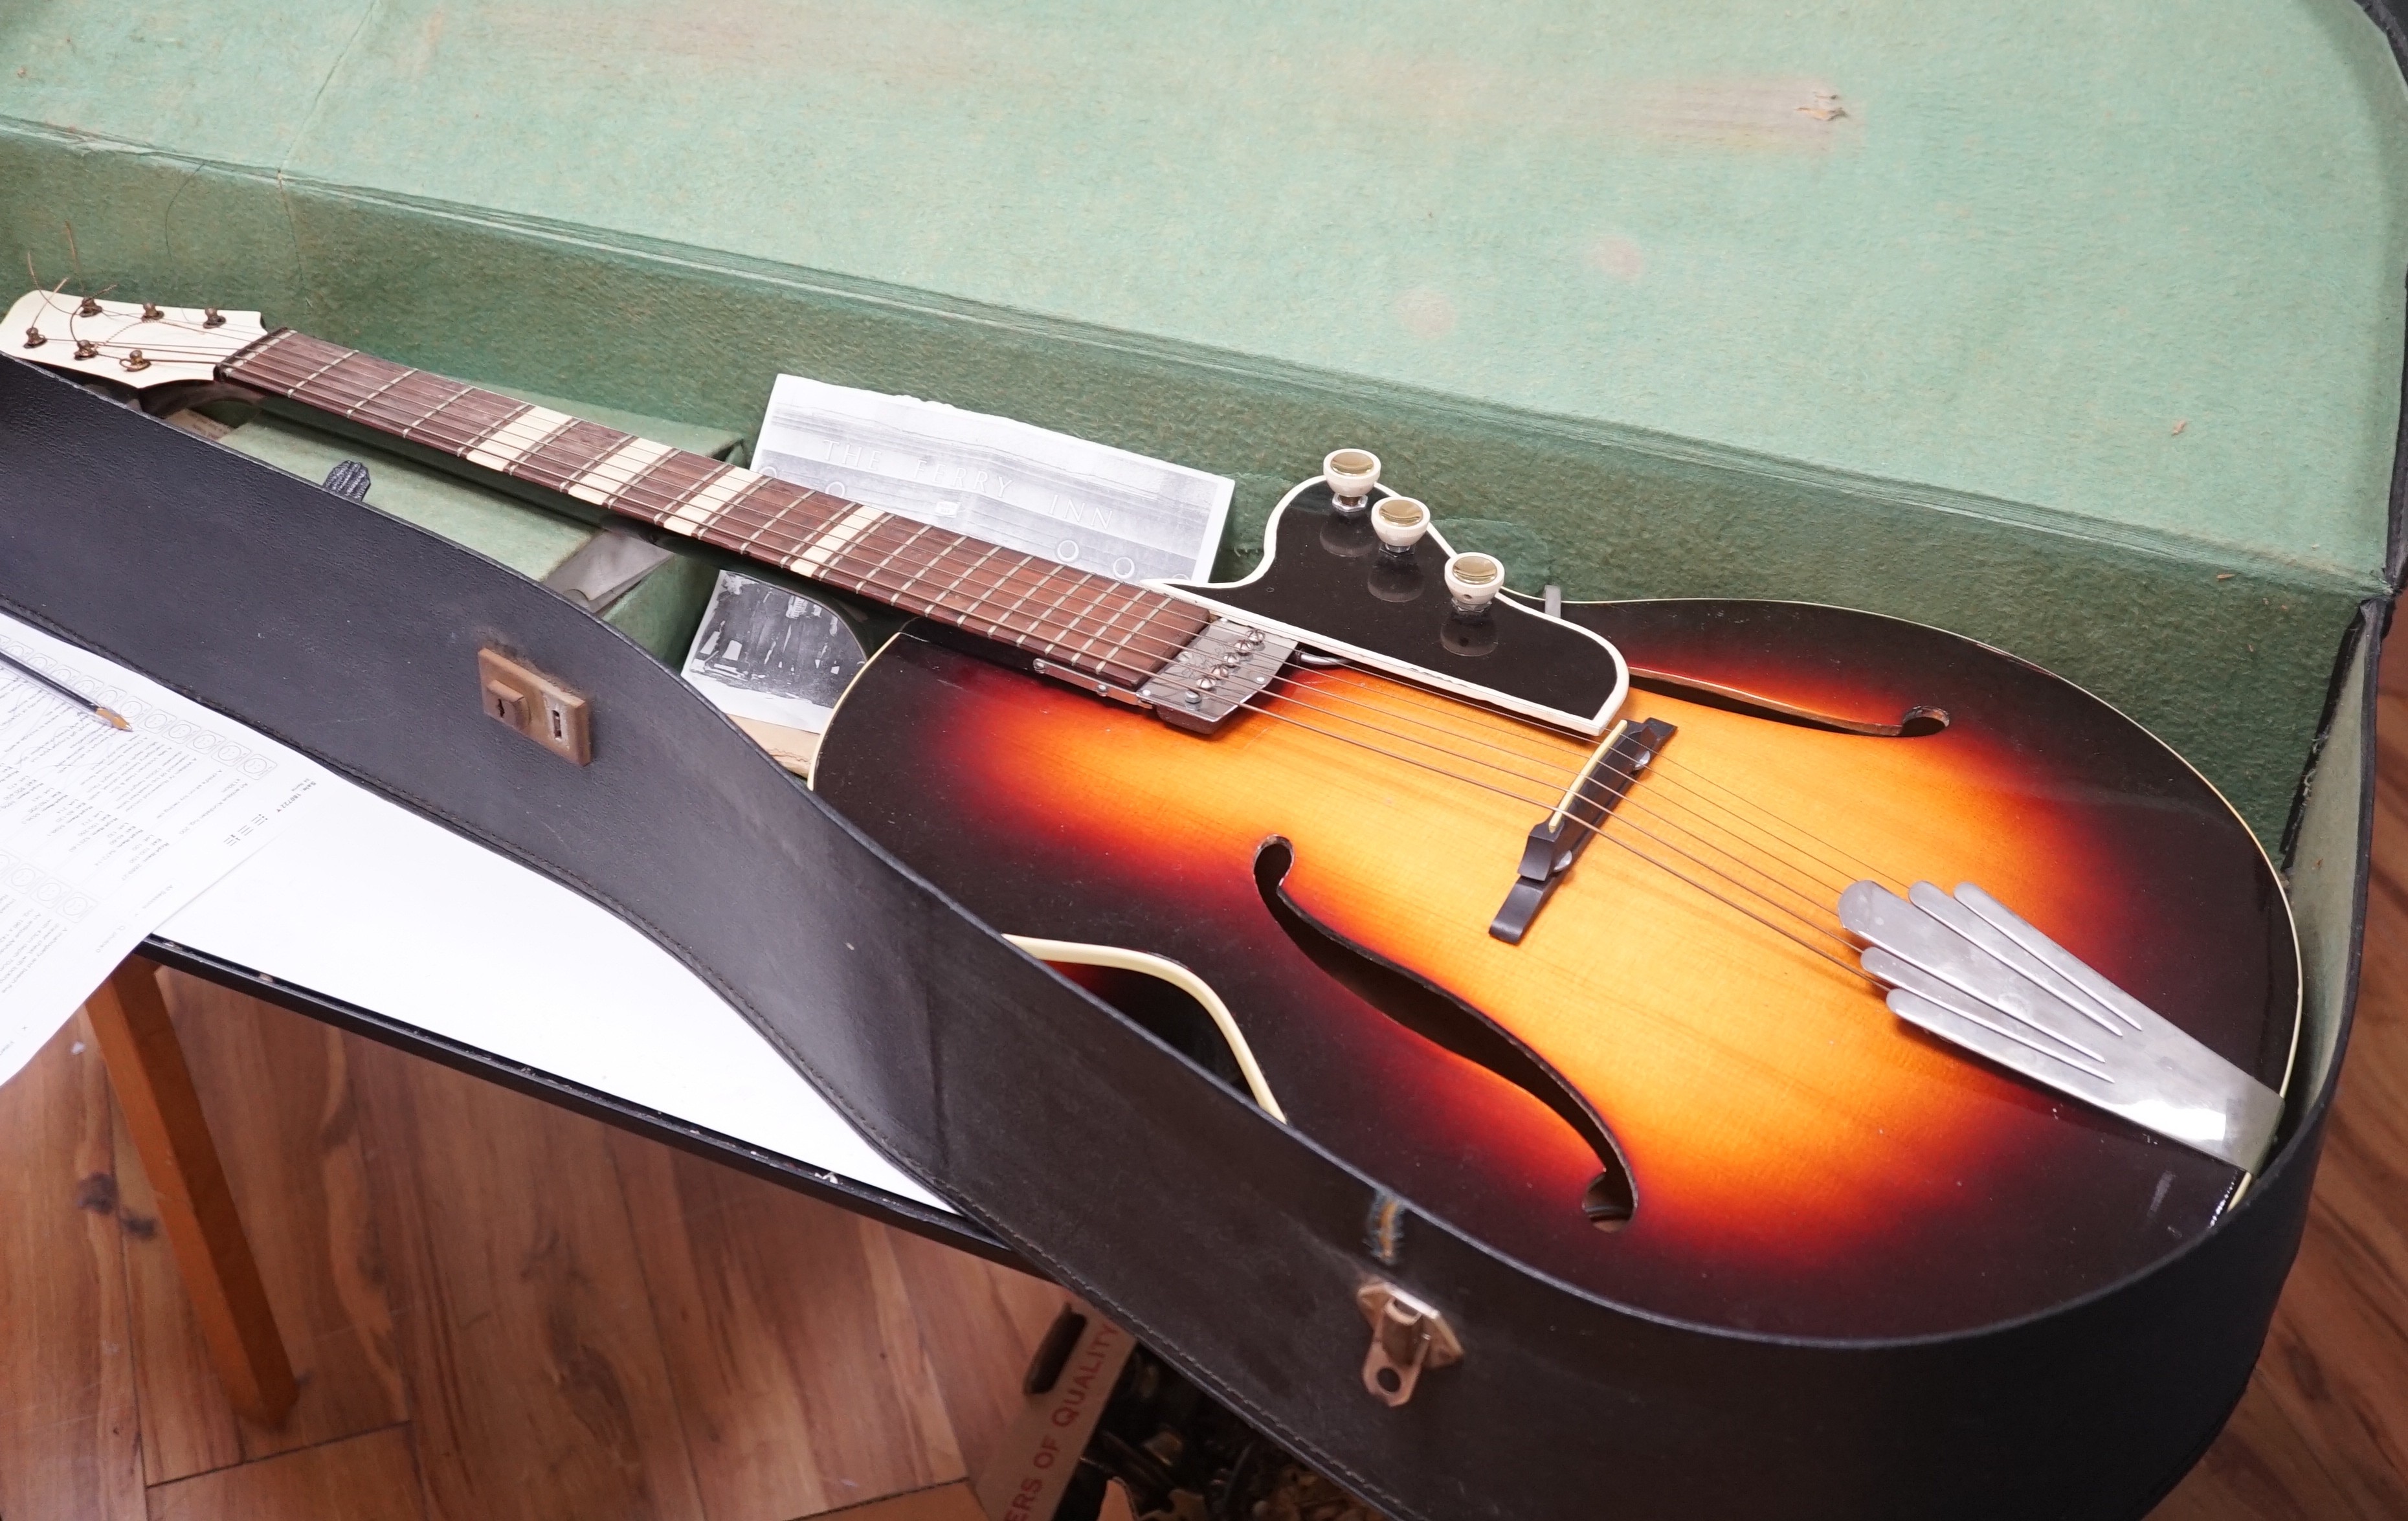 A 1950's Hofner style cut away sunburst guitar, with original case and sheet music